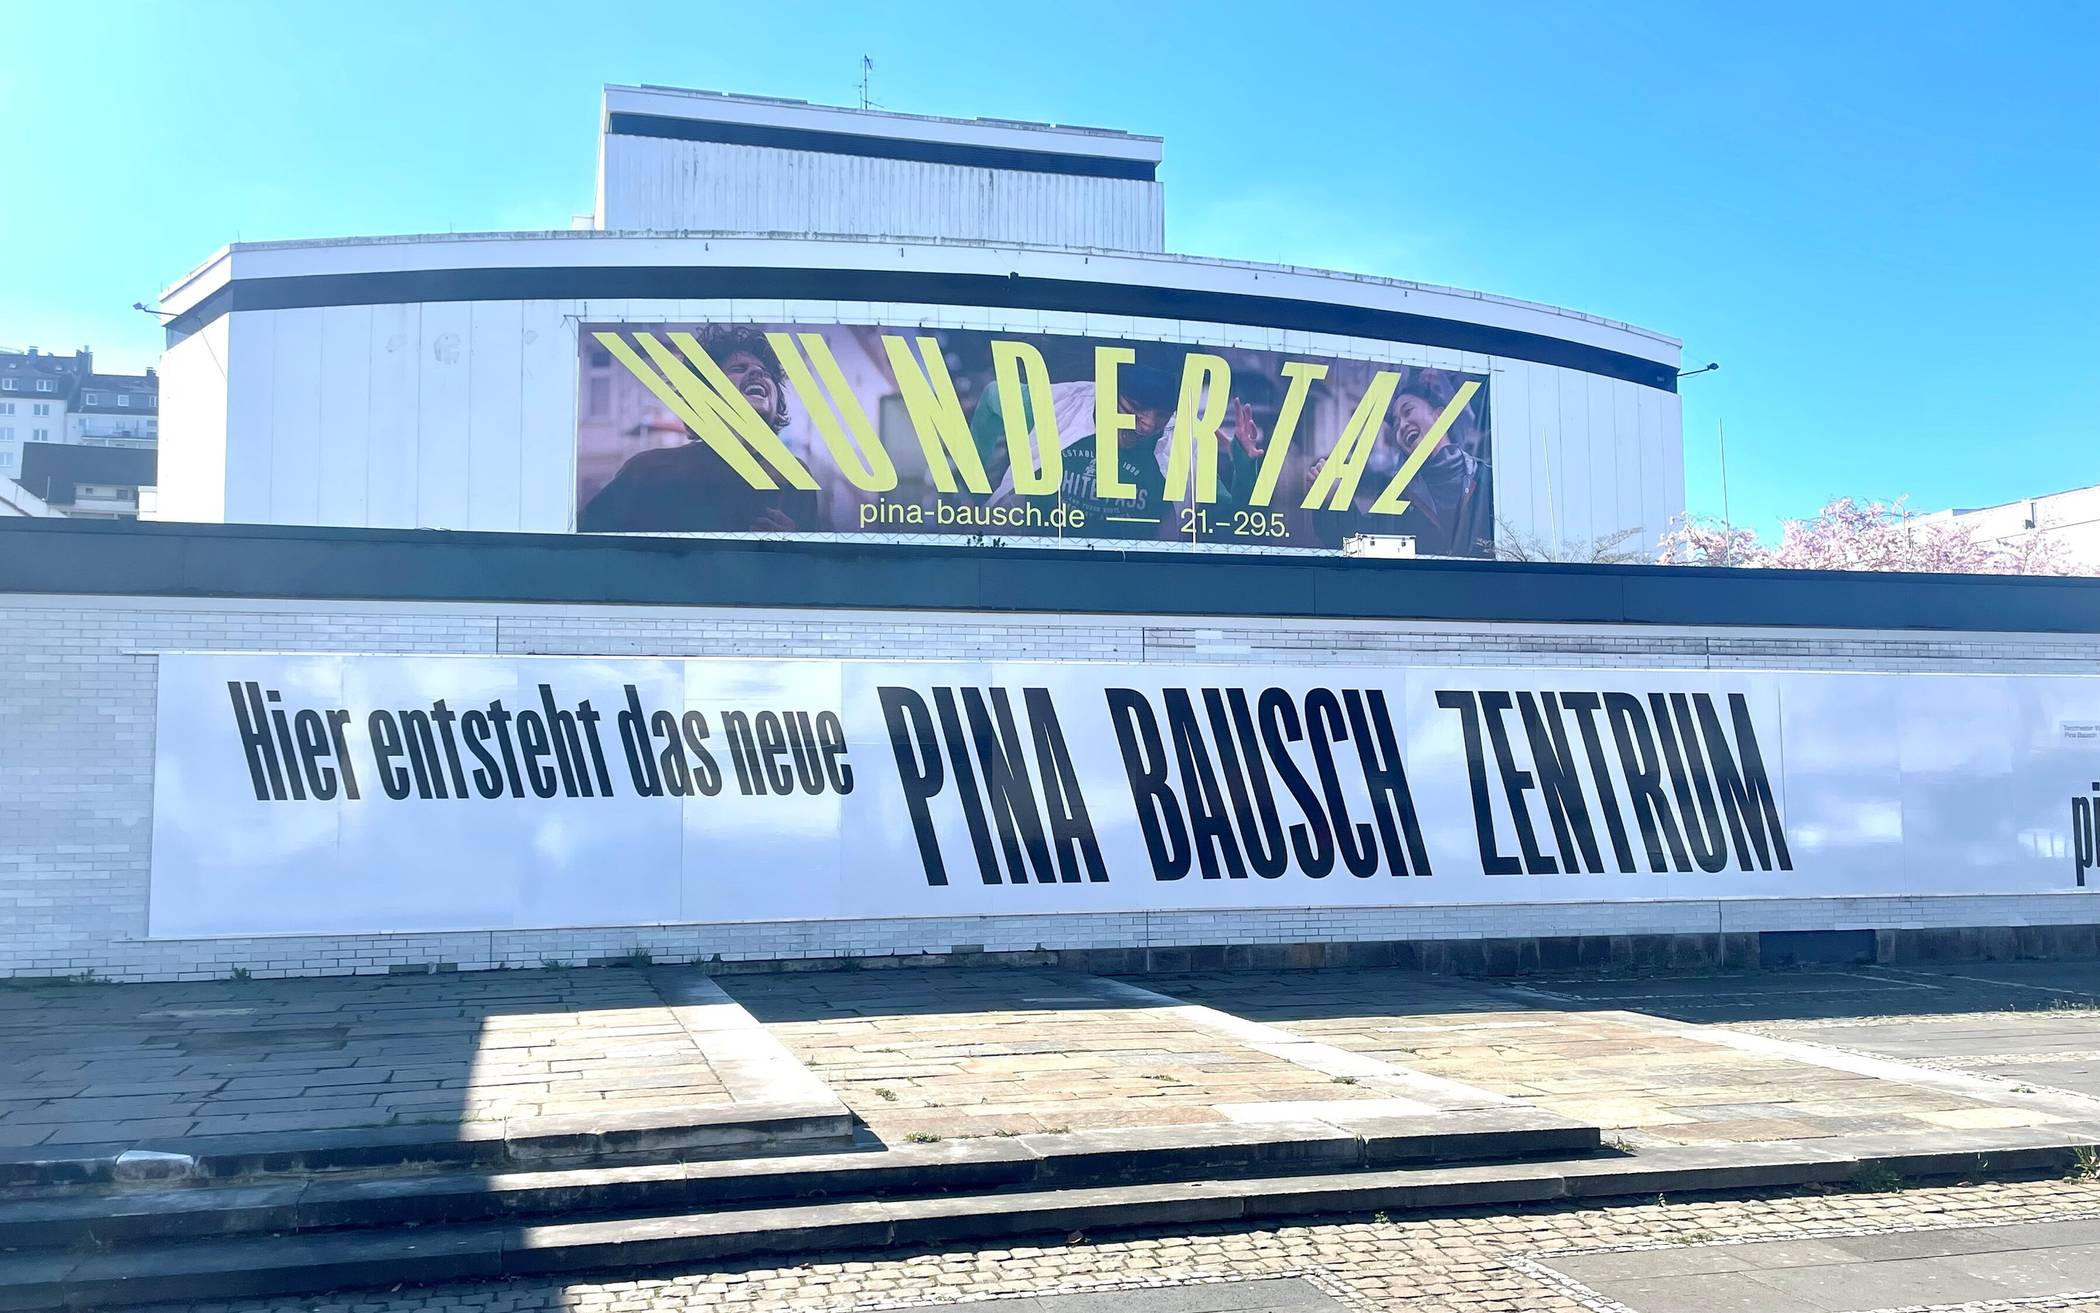 Das Pina-Bausch-Zentrum soll ins Schauspielhaus ziehen.